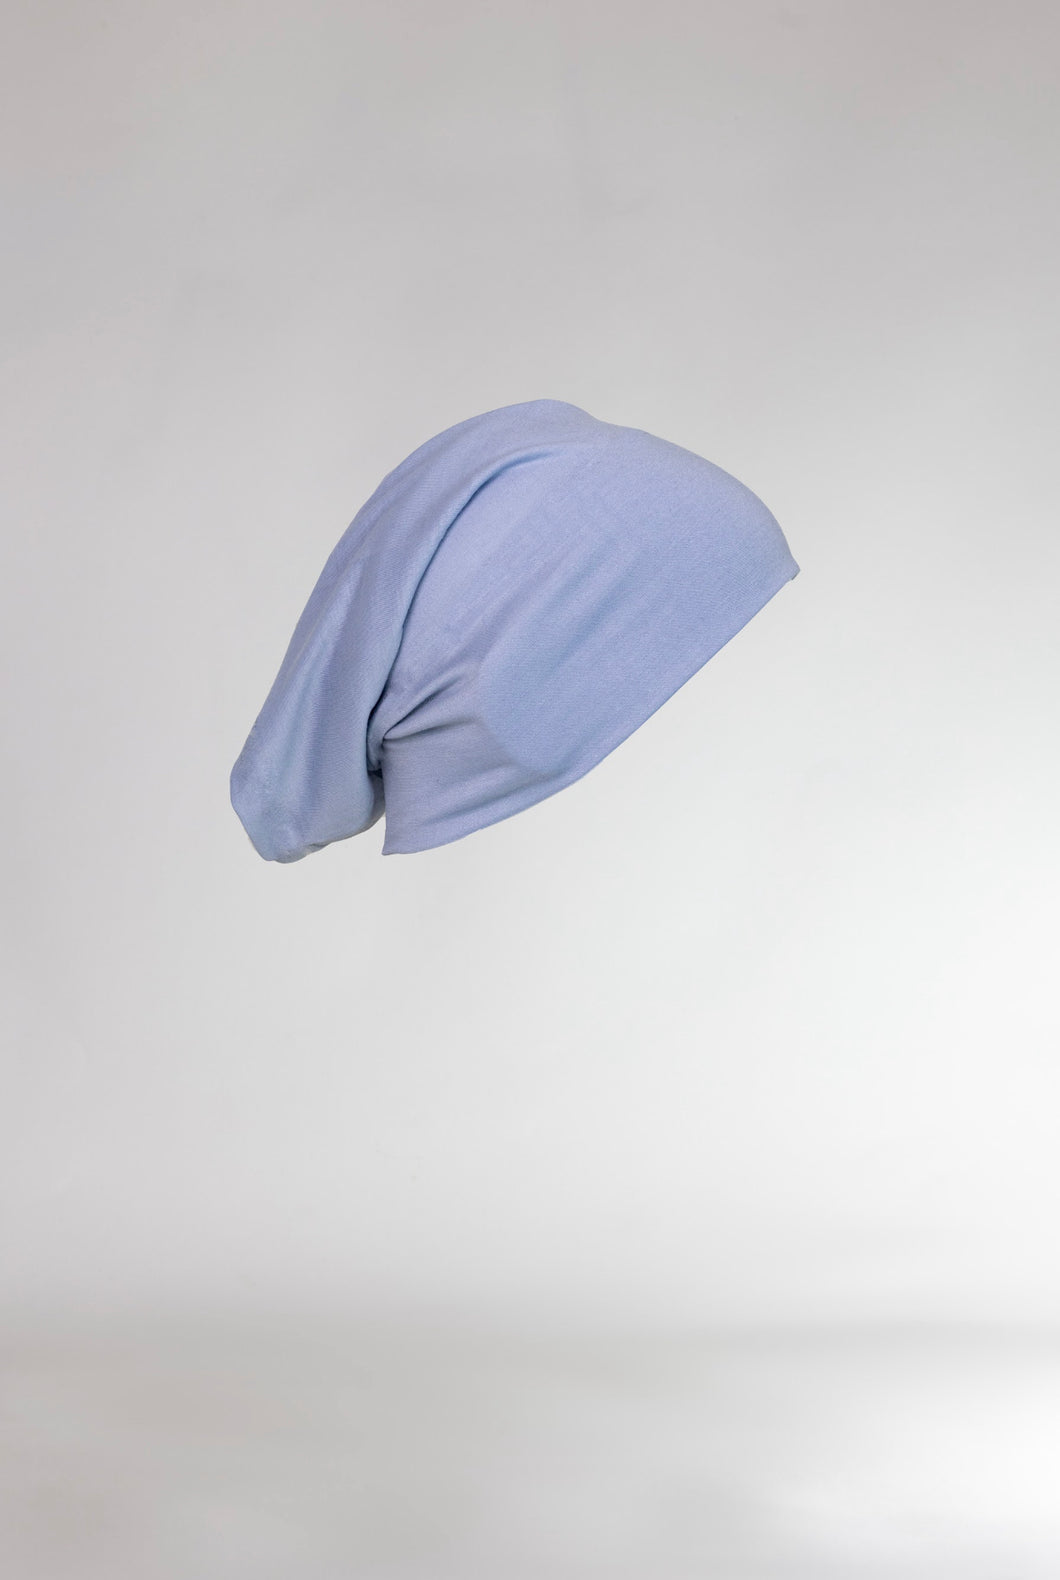 Sky Blue Hijab Cap